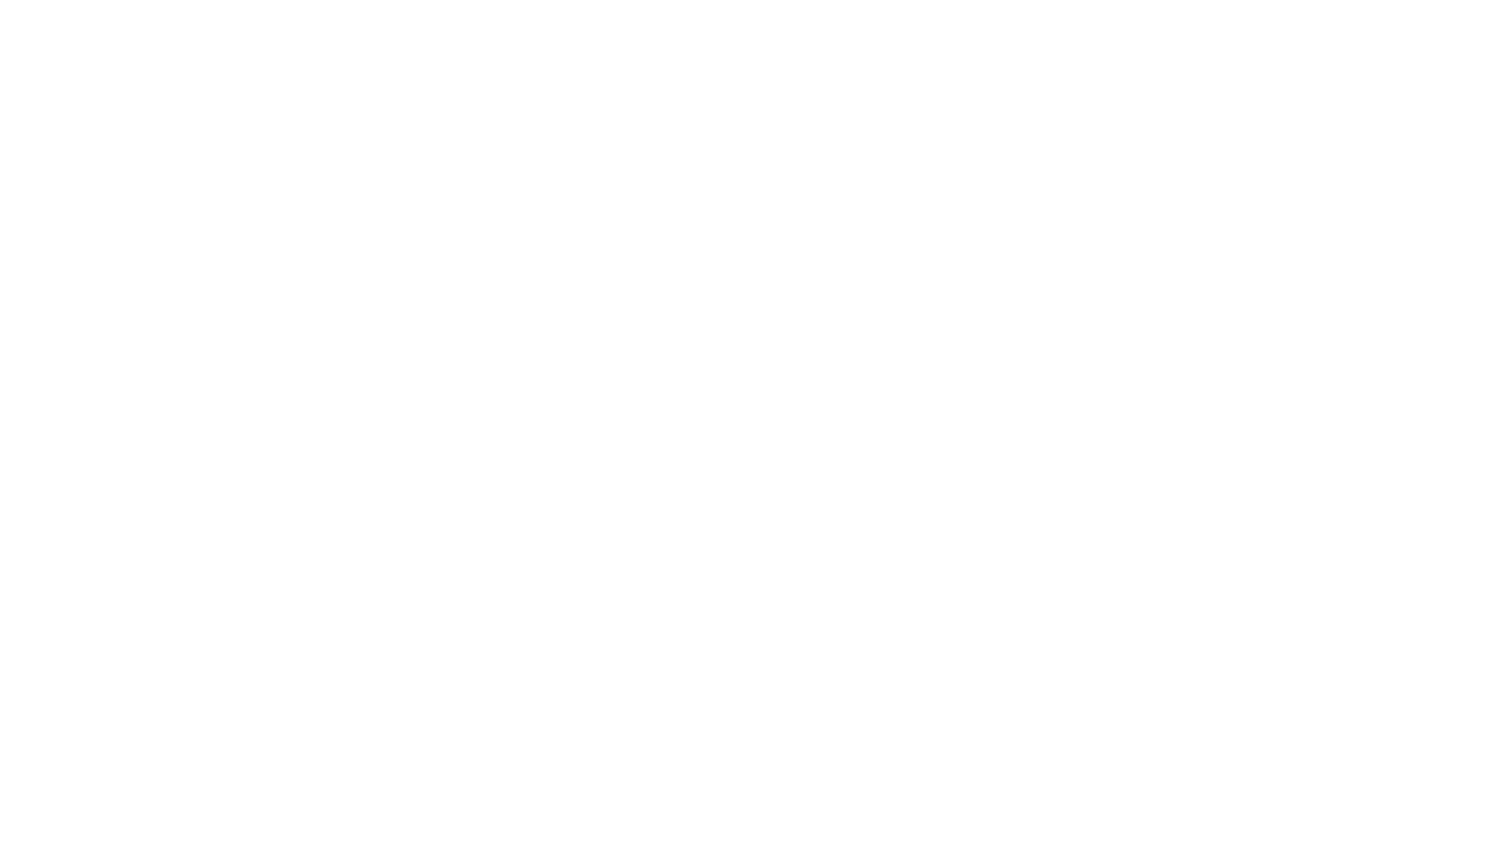 Justin Phillips